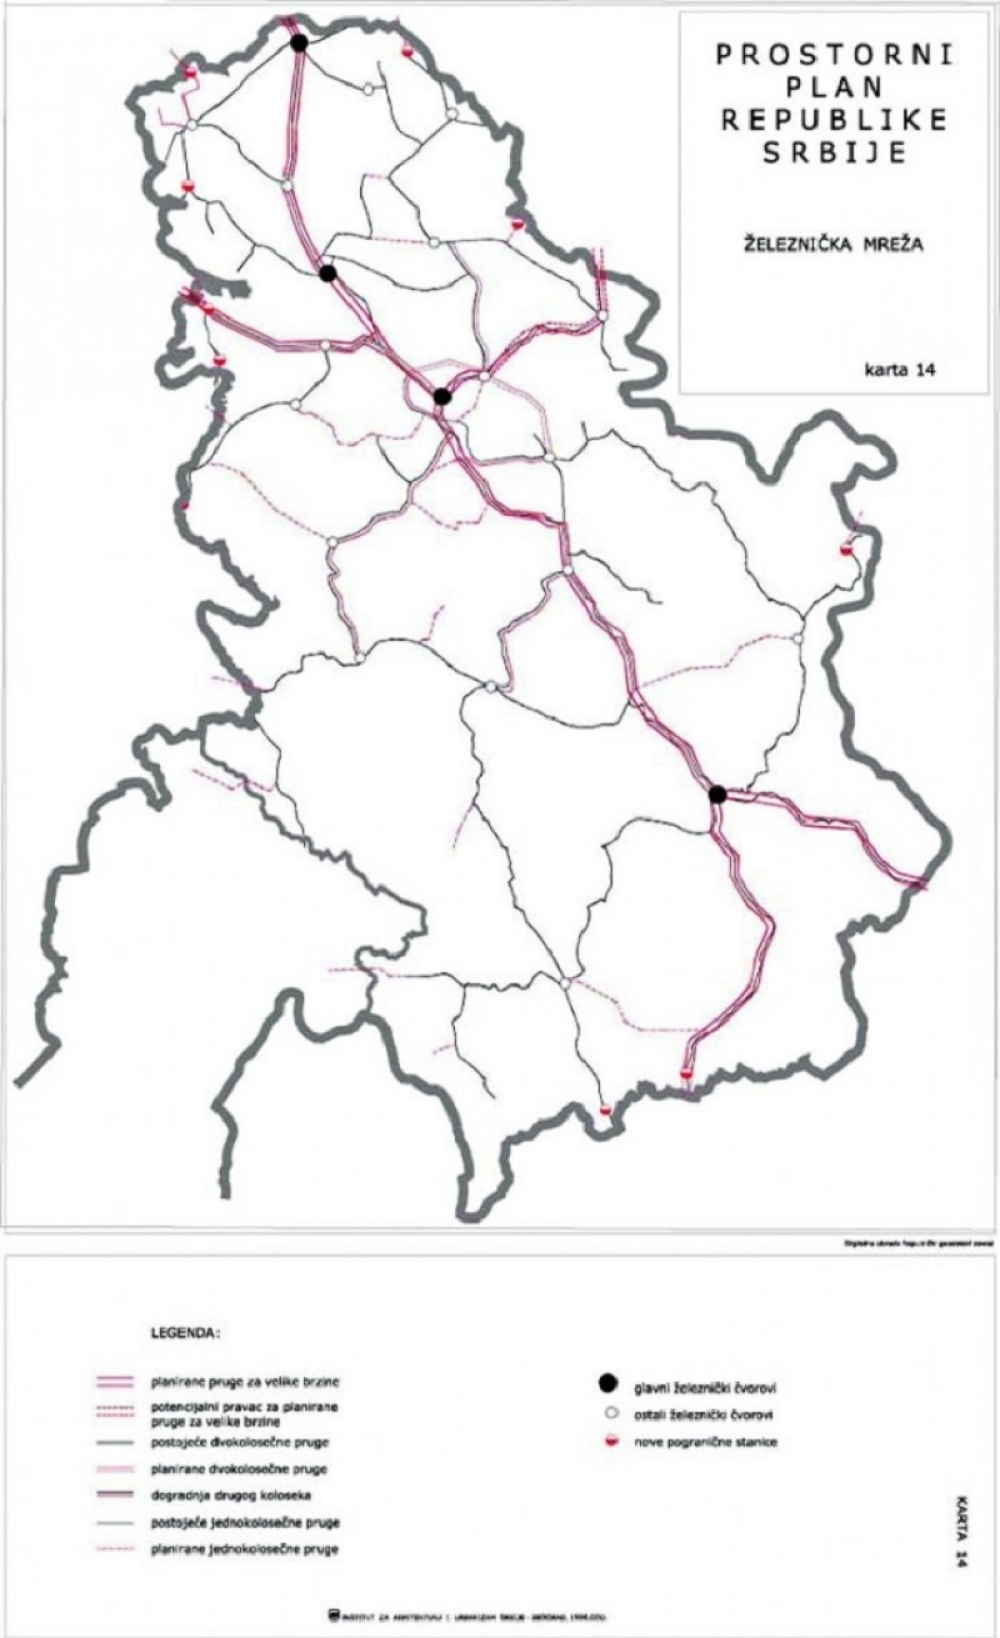 Prostorni plan Republike Srbije